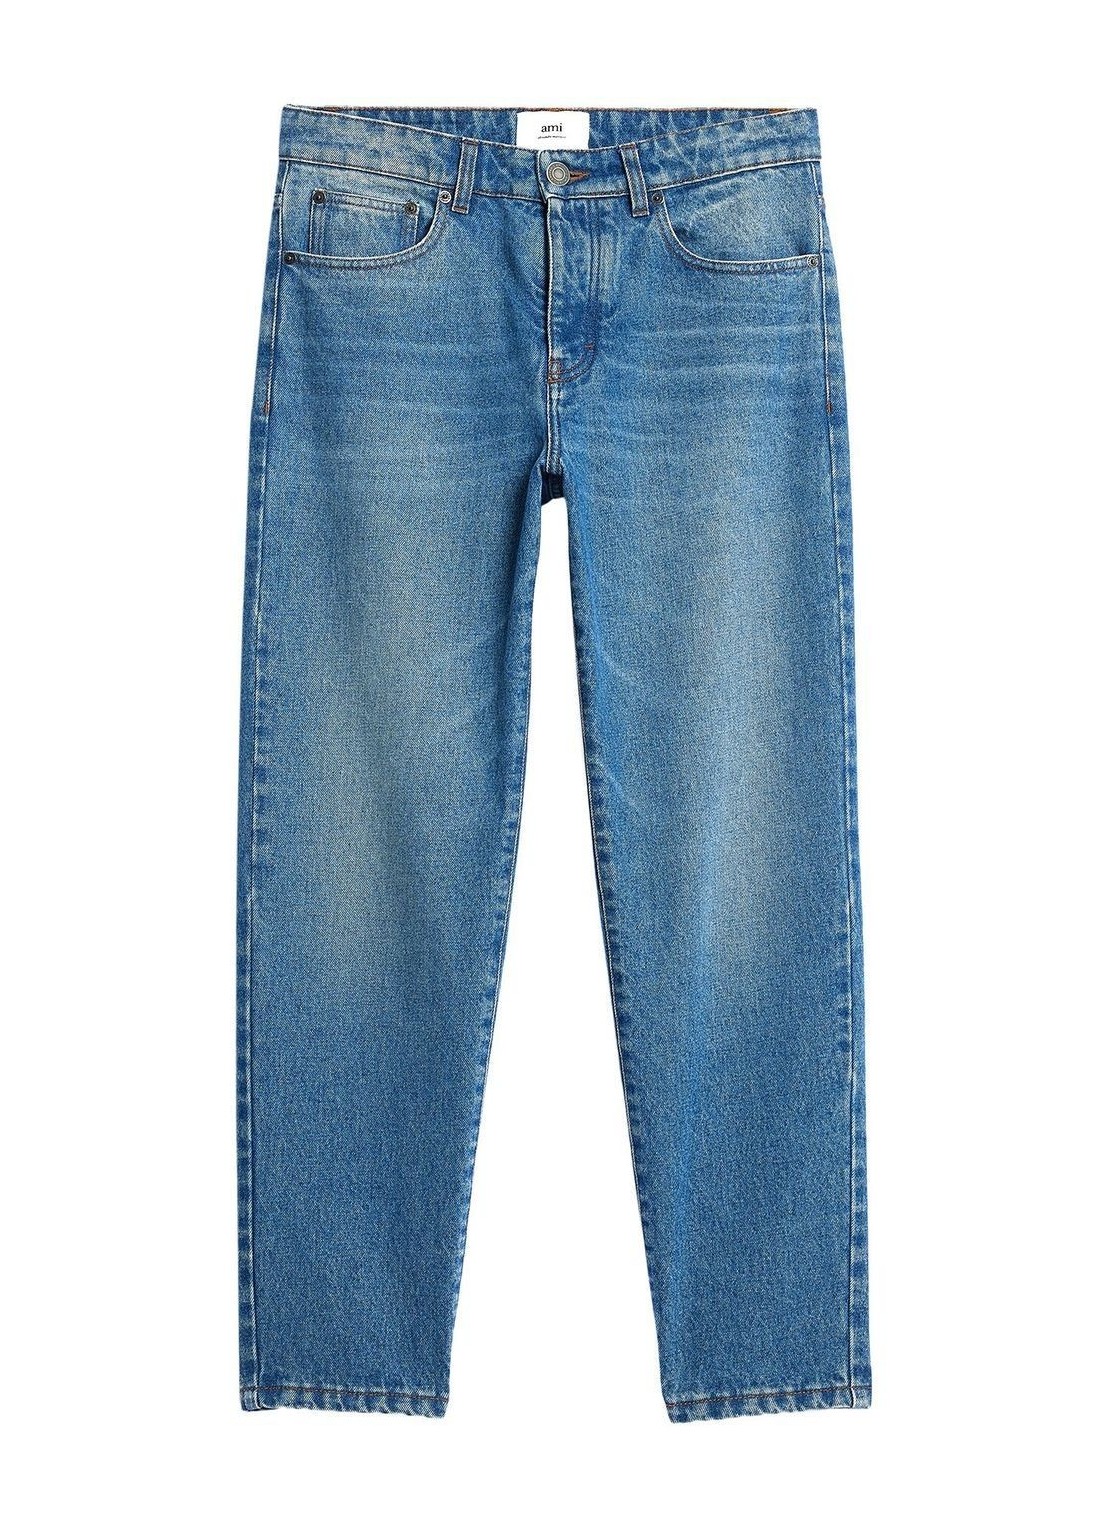 Pantalon jeans ami denim man classic fit jean htr001de0001 480 talla 34
 